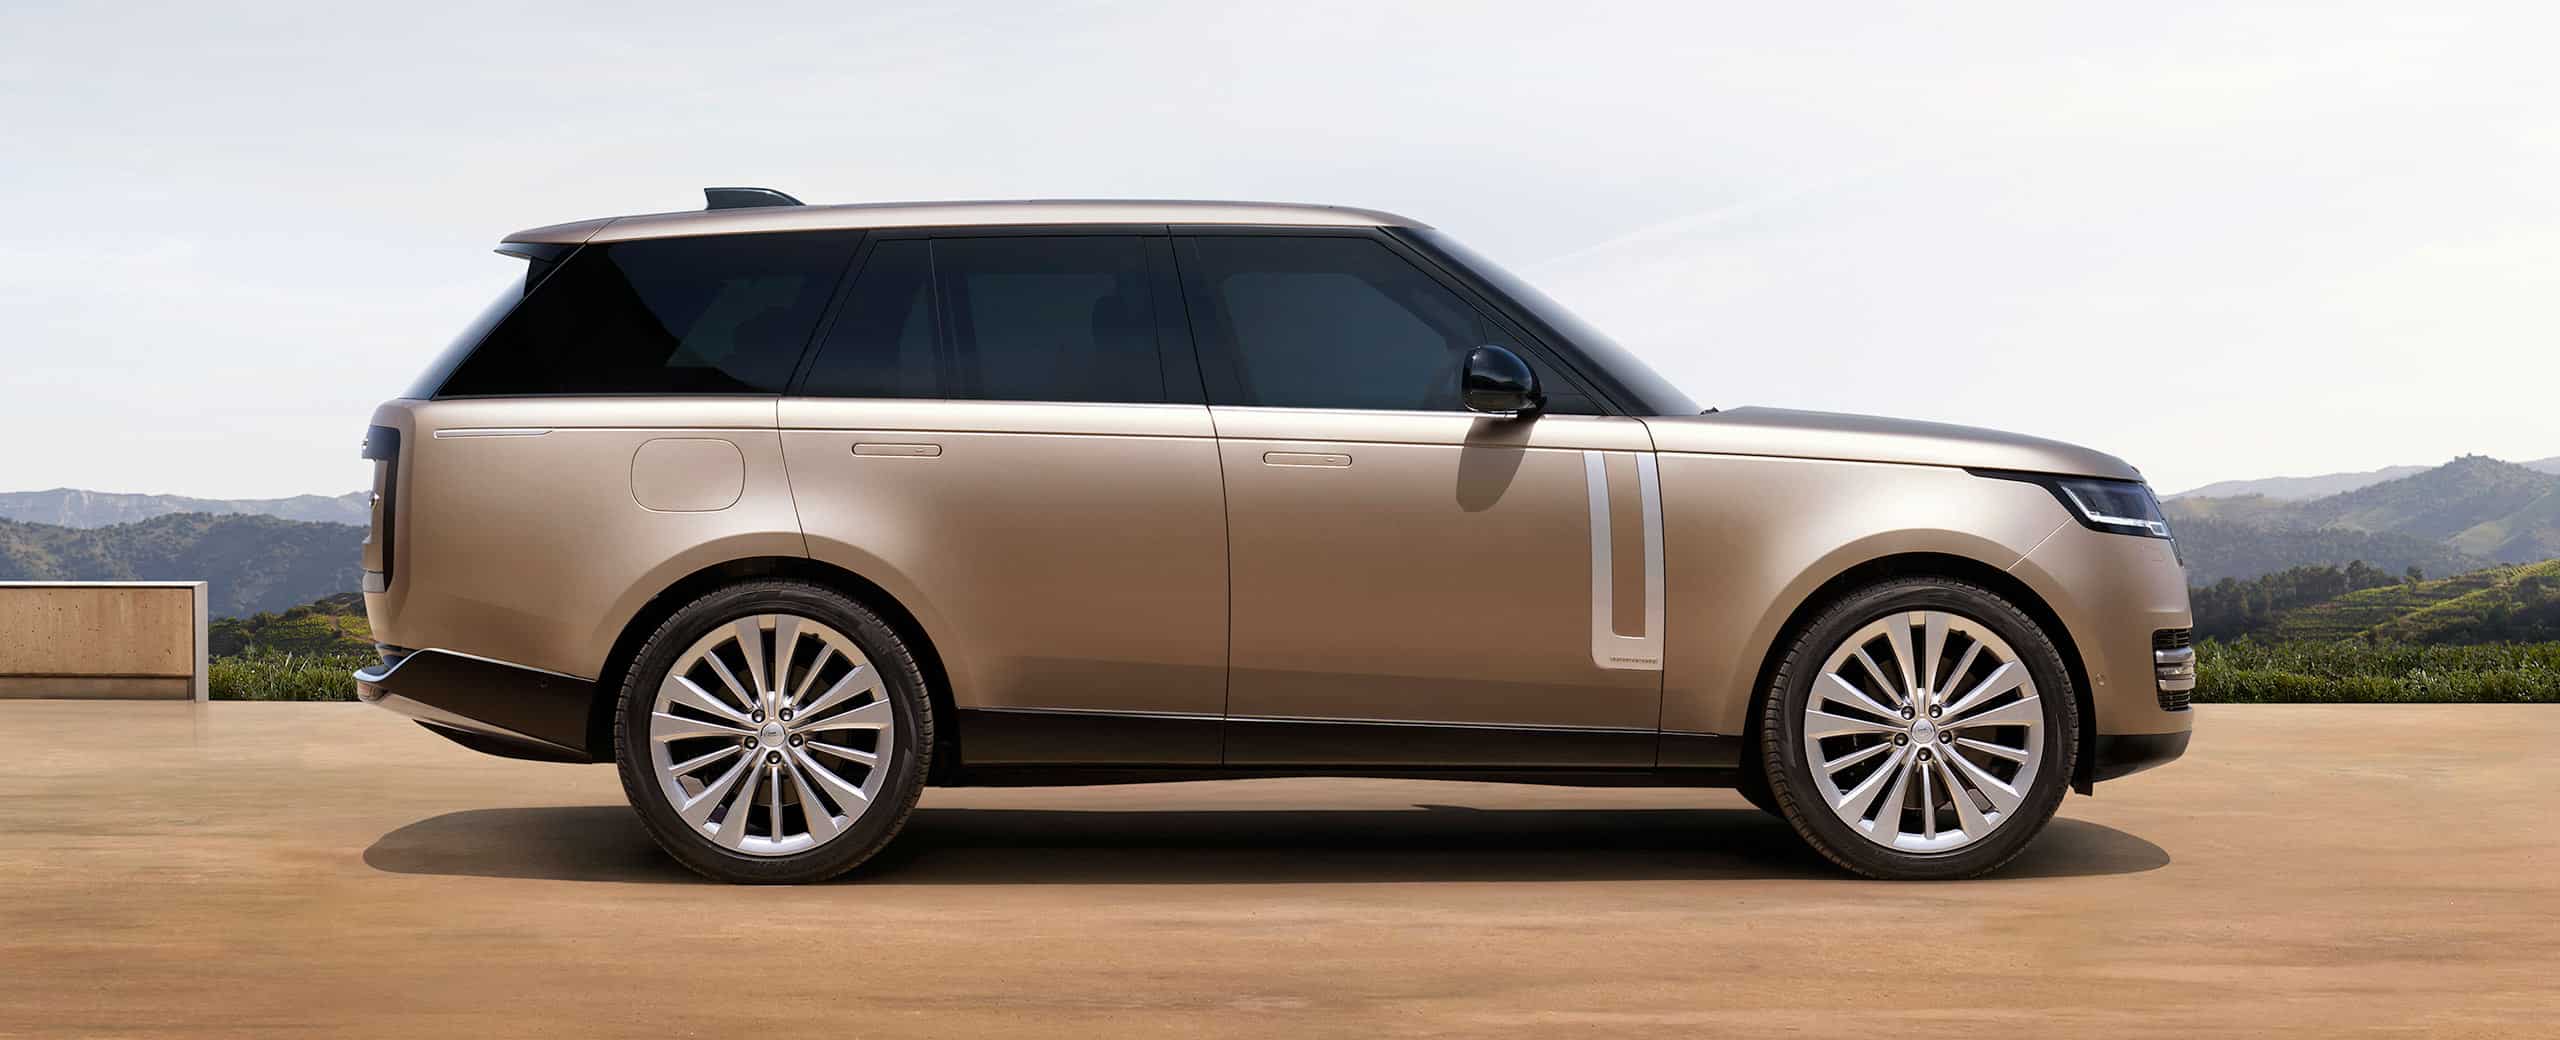 Range Rover | Luxury Performance Land